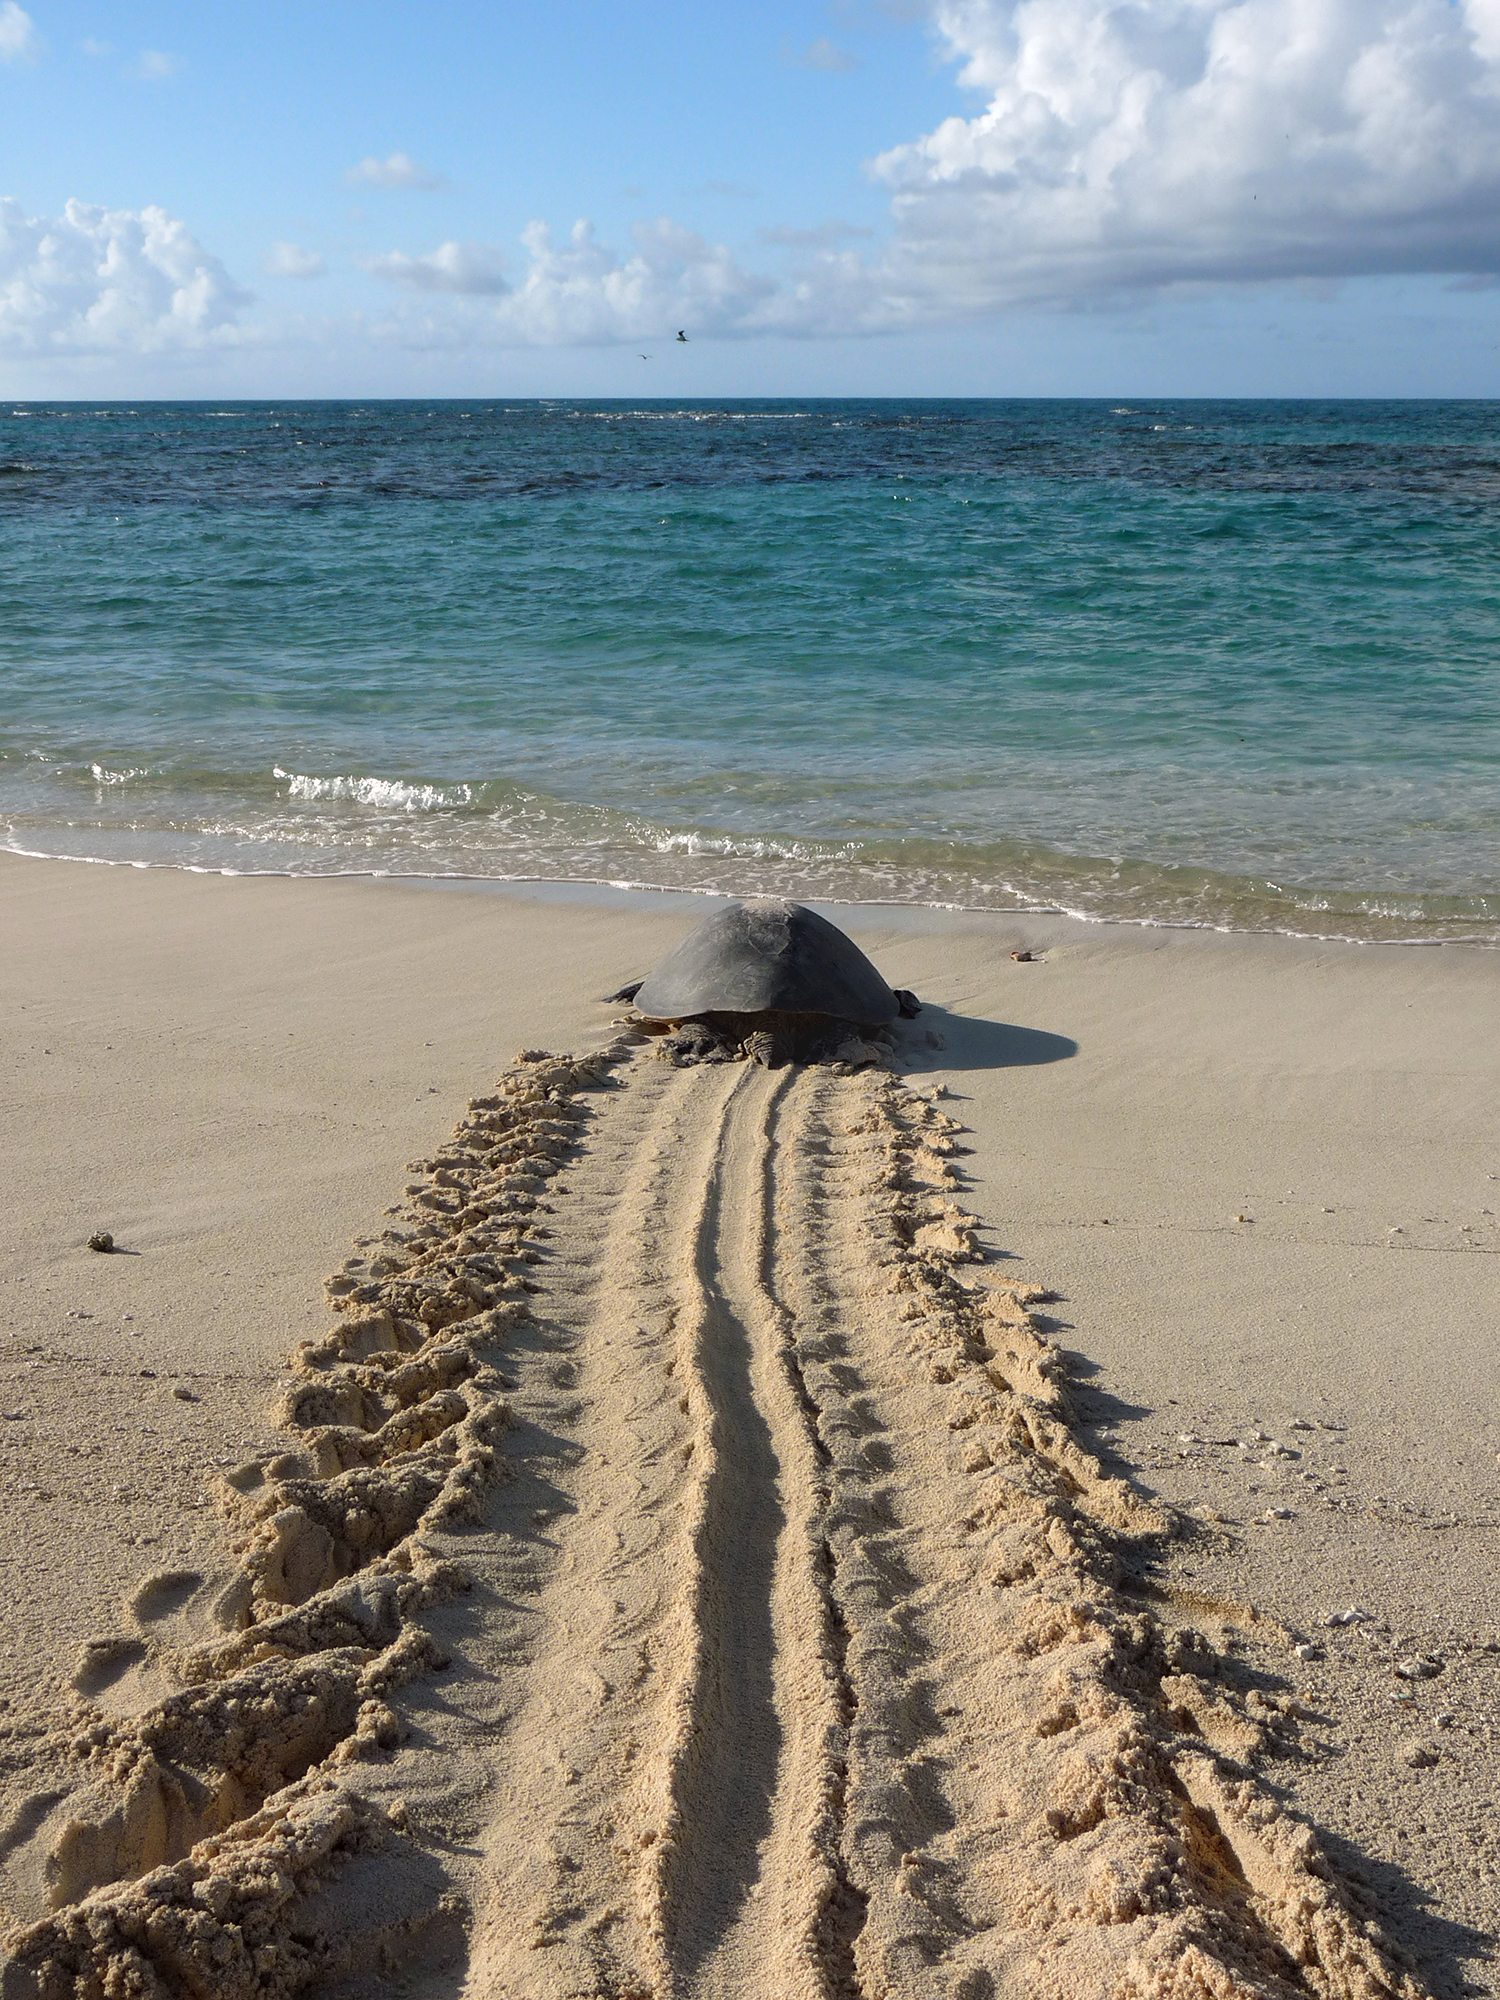 [Green sea turtle] Photo by Mark Sullivan.